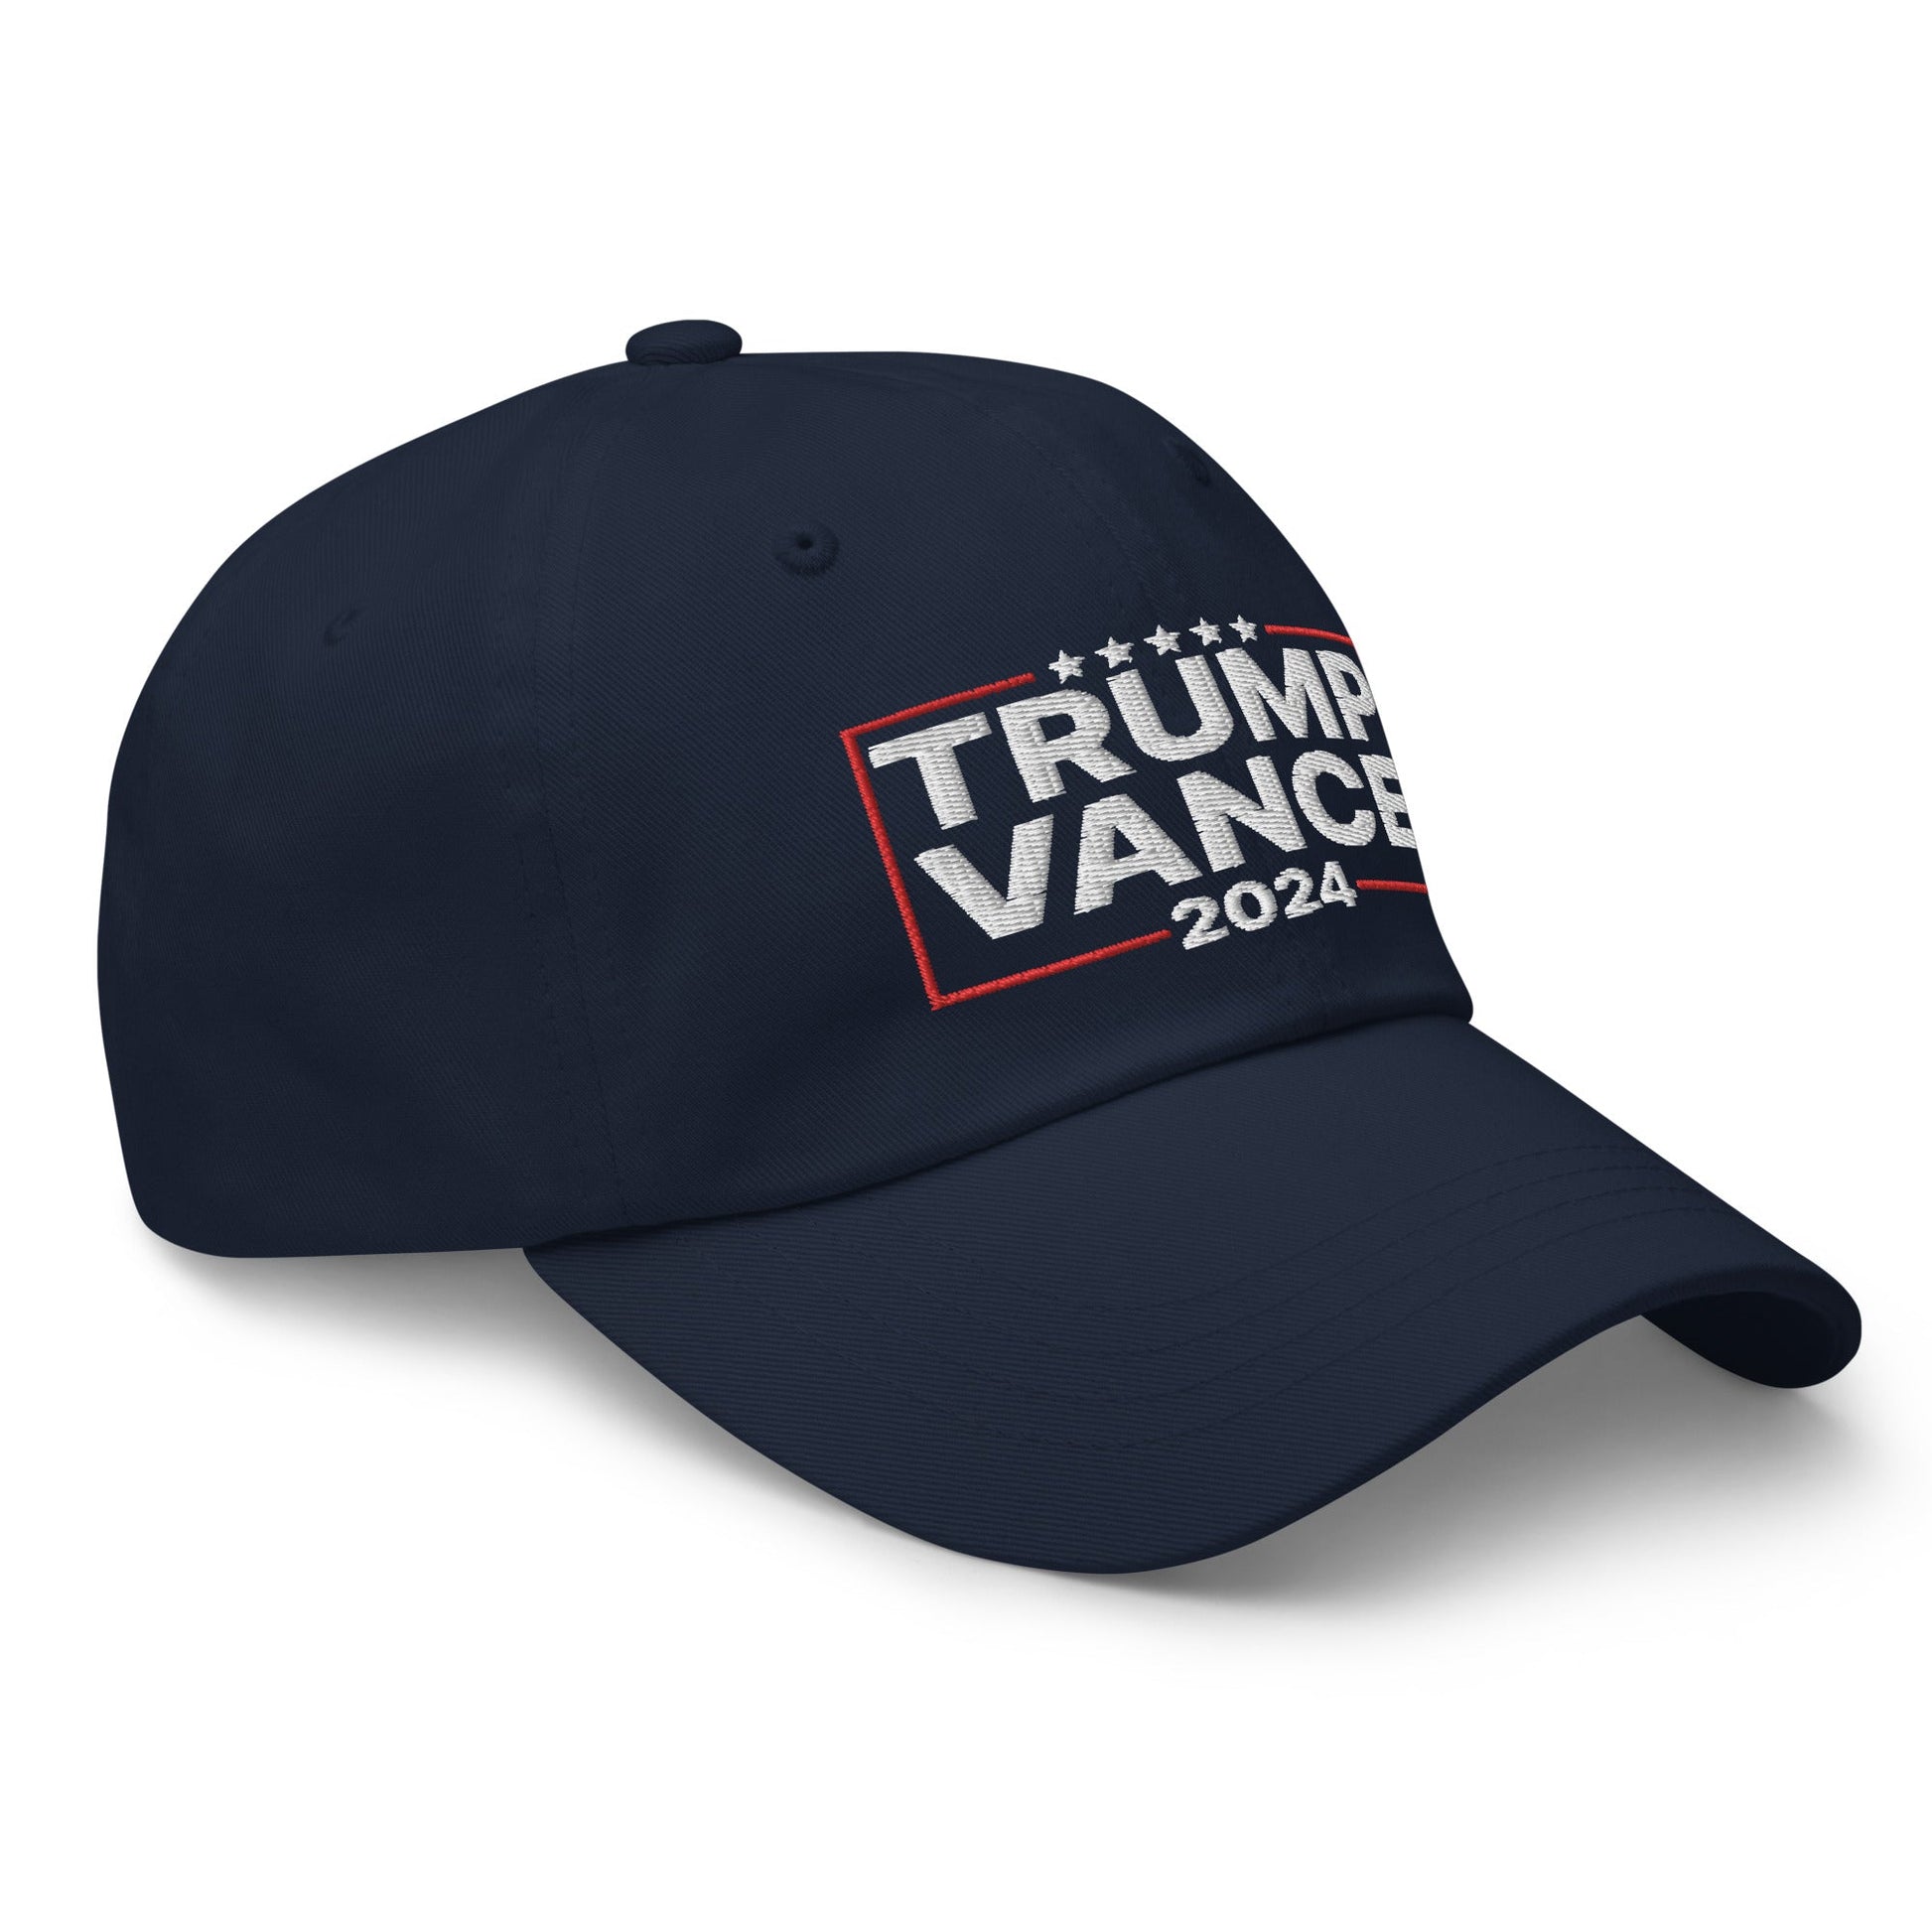 Trump Vance 2024 Dad Hat Navy